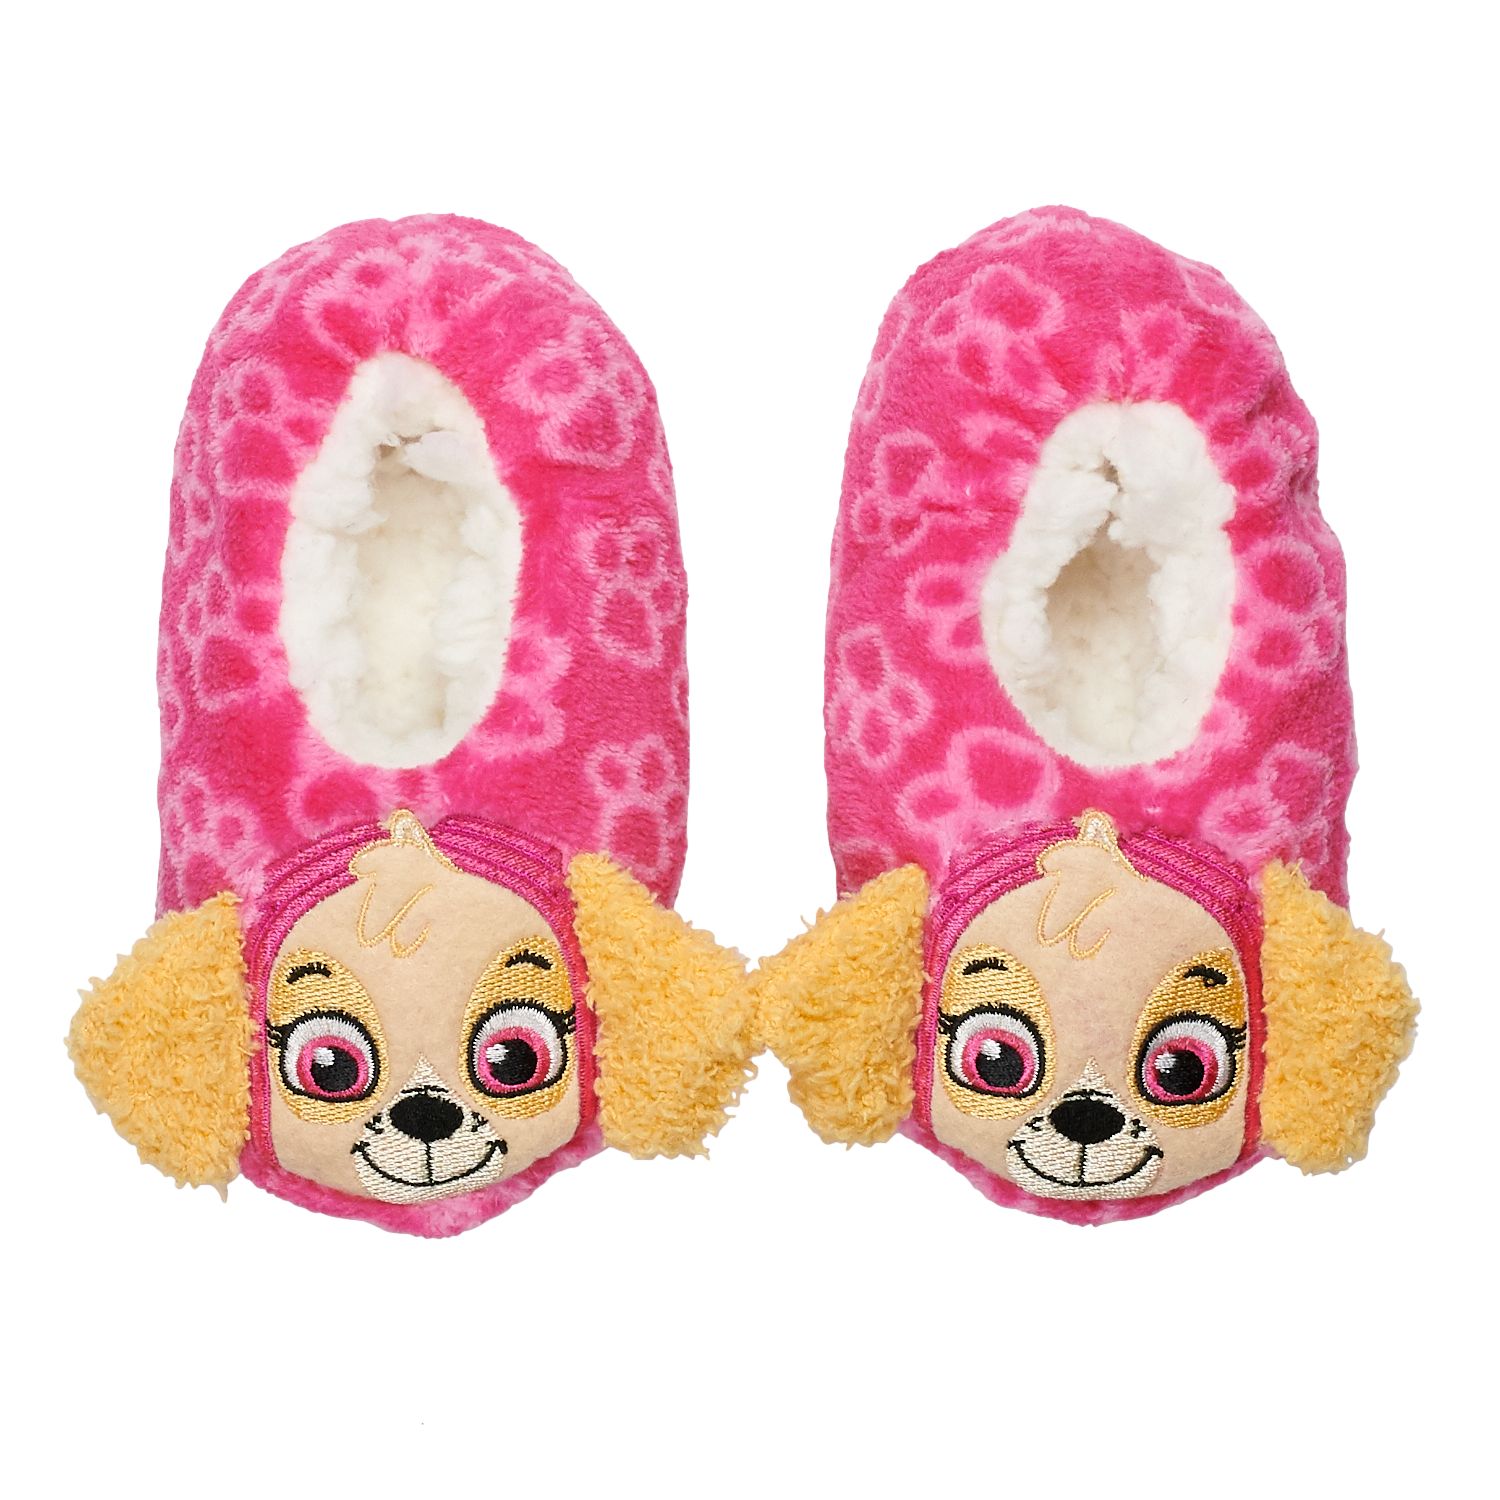 paw patrol slippers kohls